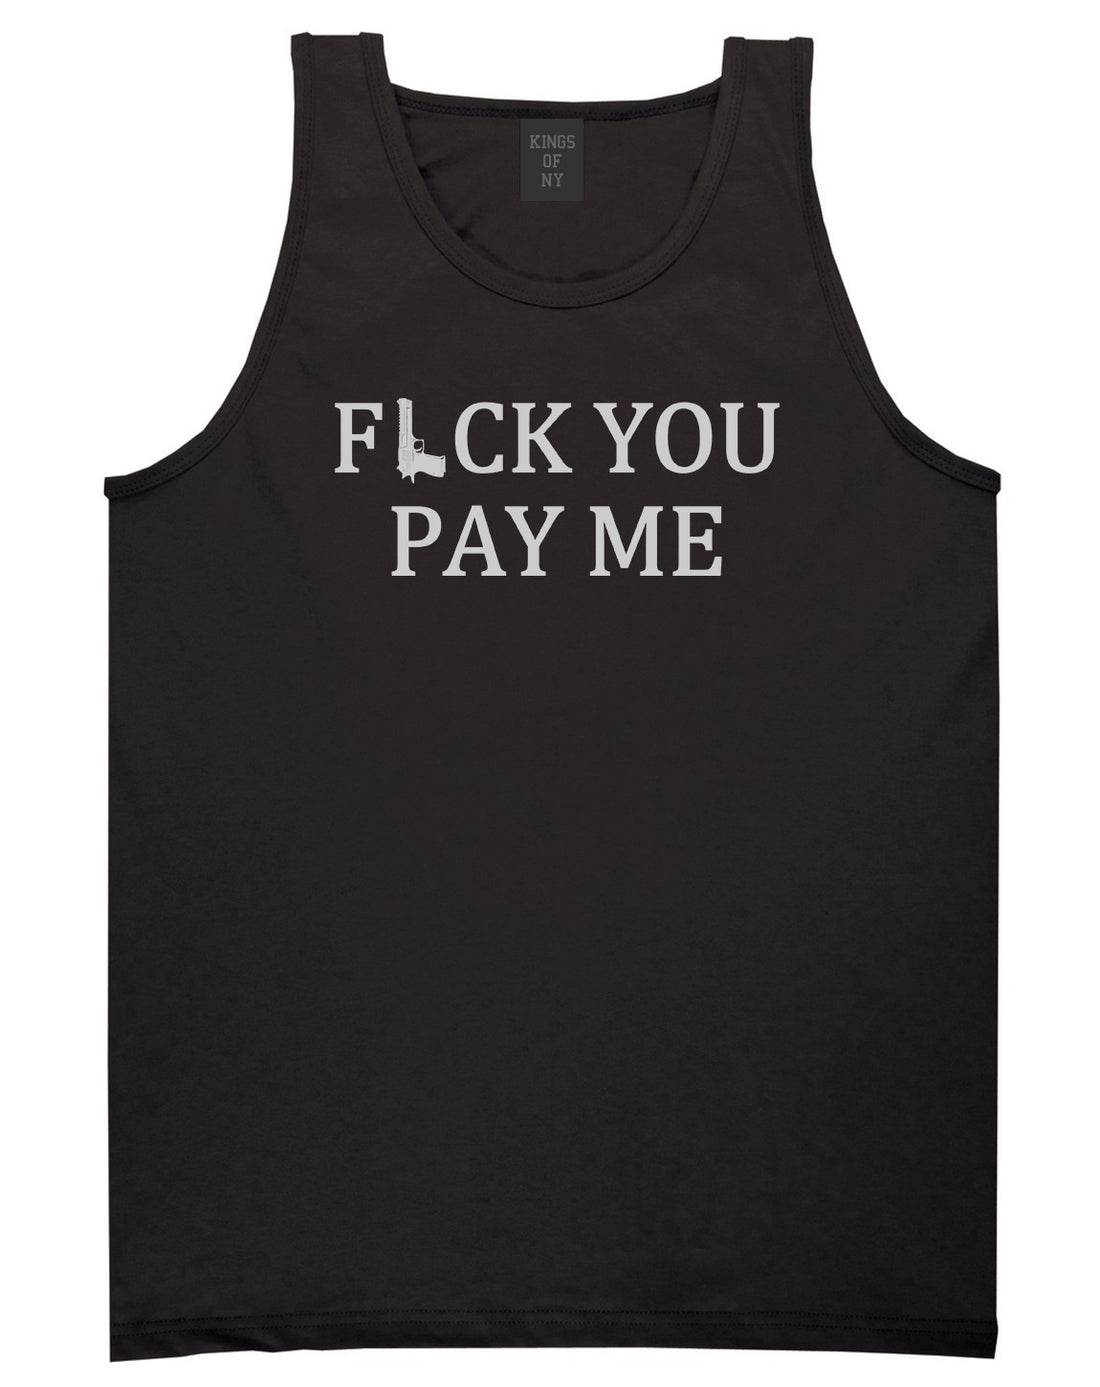 Fck You Pay Me Gun Mens Tank Top Shirt Black by Kings Of NY